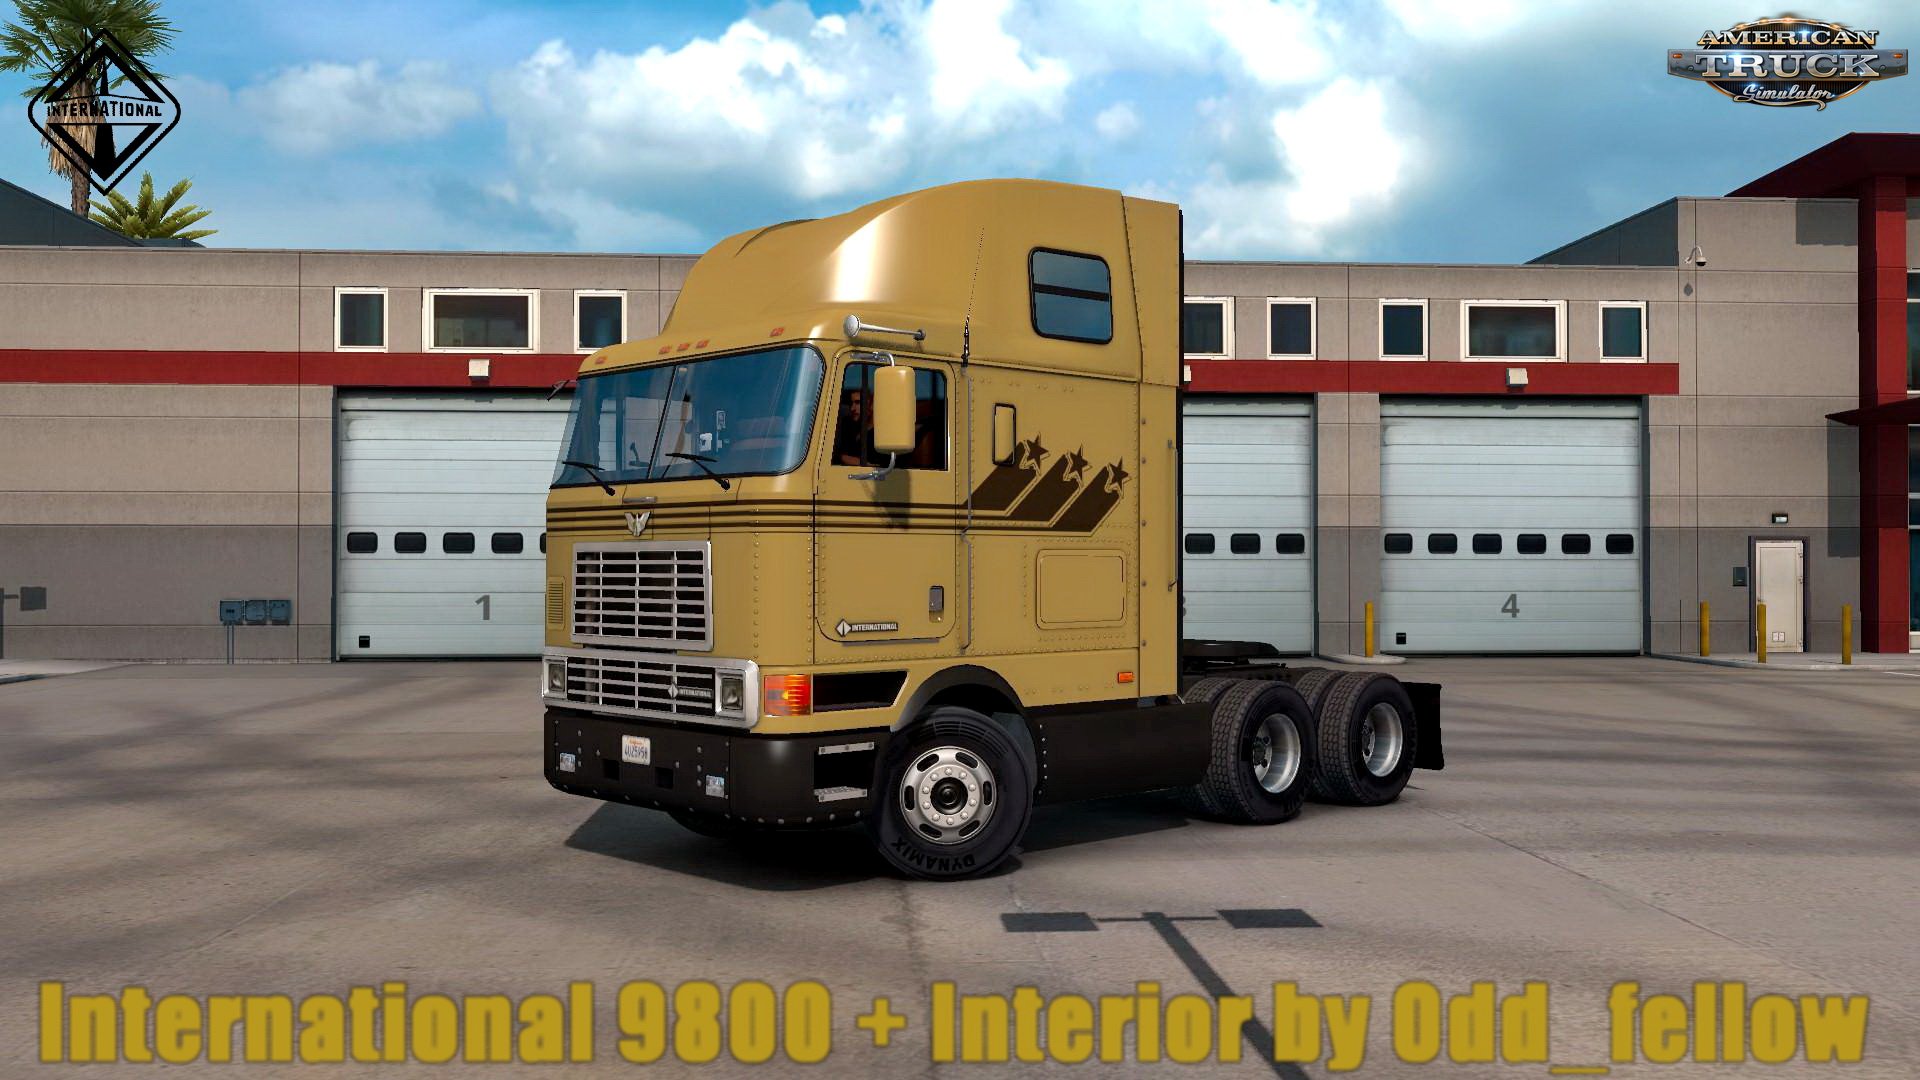 International 9800 + Interior v2.1 by Odd_fellow (1.35.x) for ATS